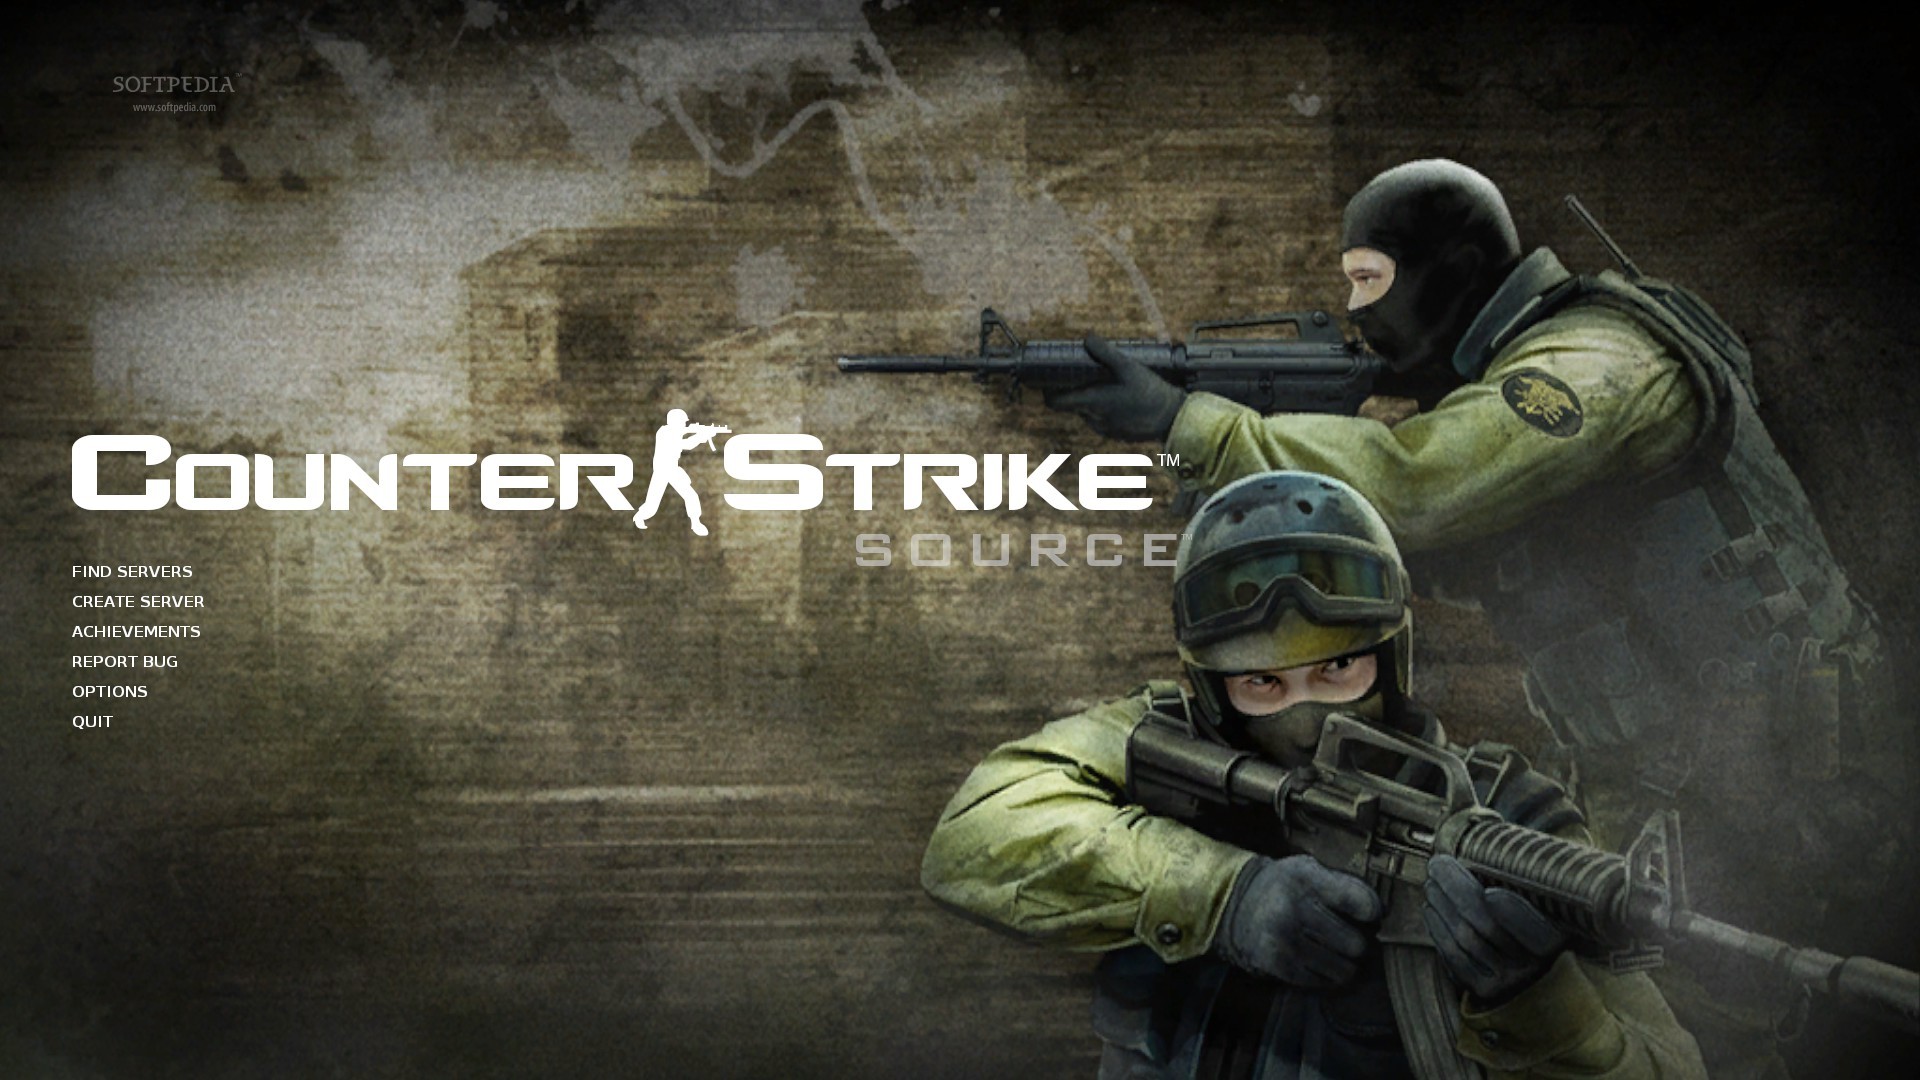 Counter strike pc free download full version